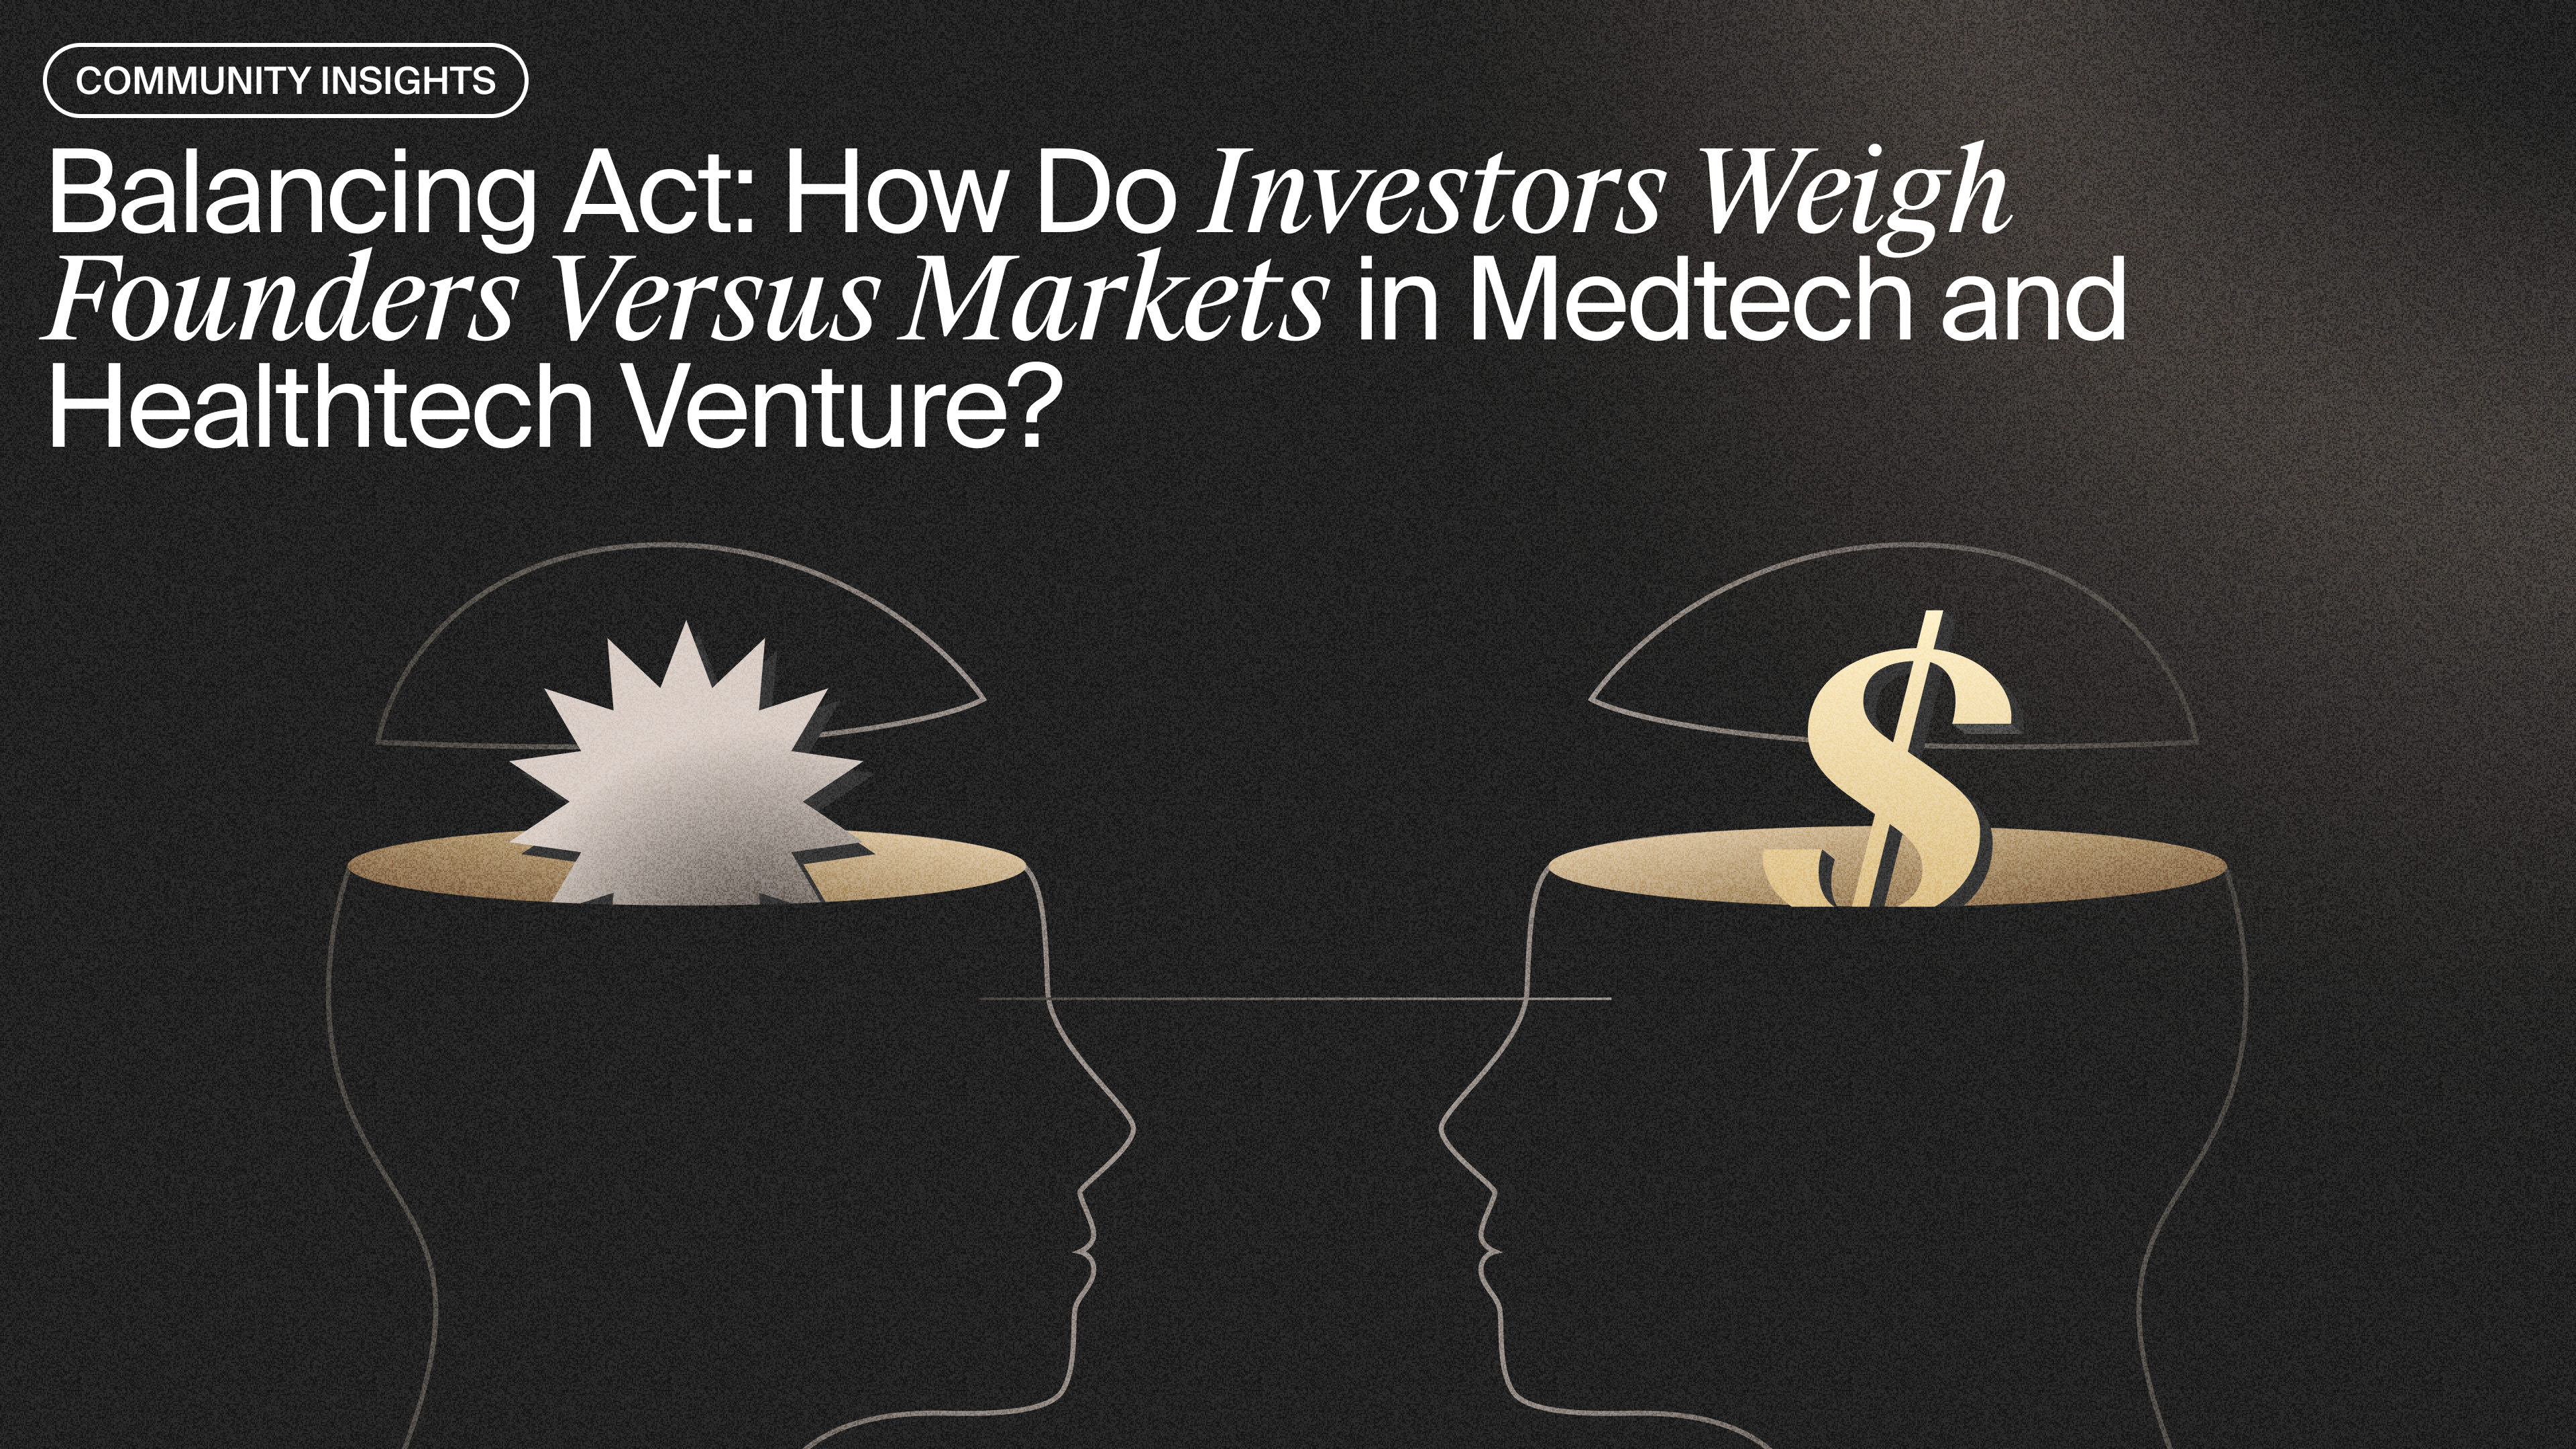 Founder vs Market, medical device venture capital